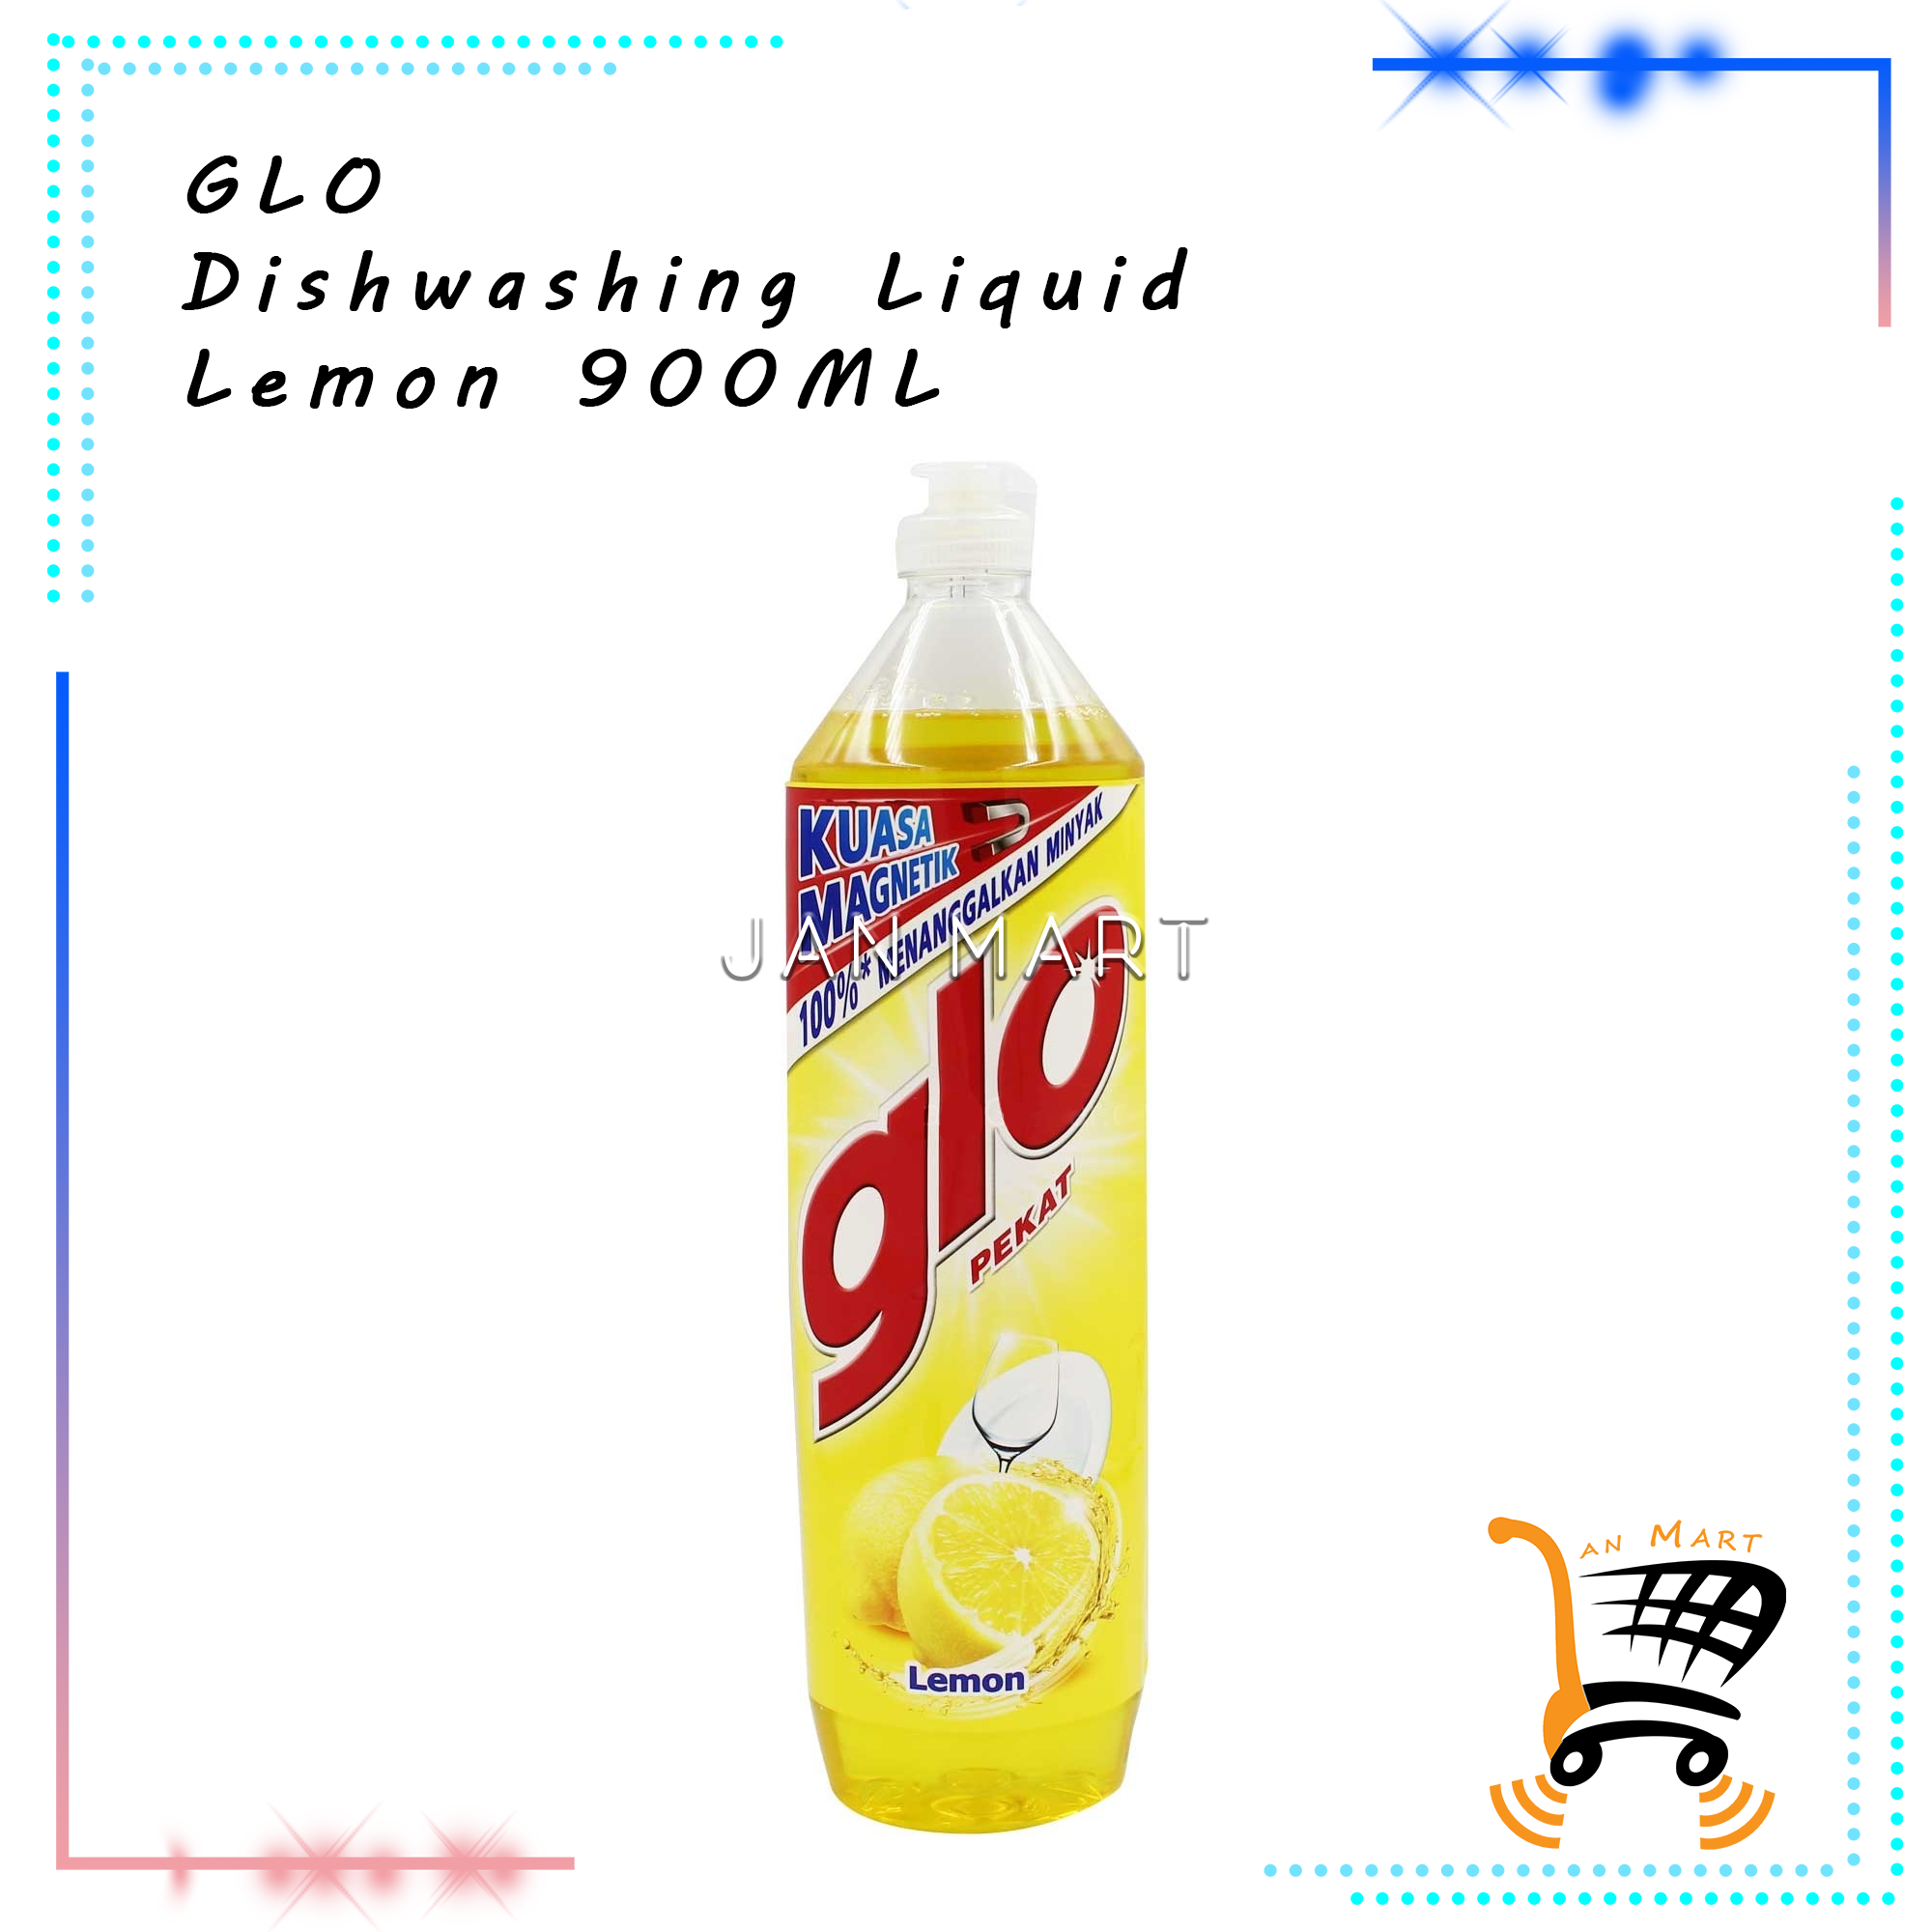 GLO Dishwashing Liquid Lemon 900ML